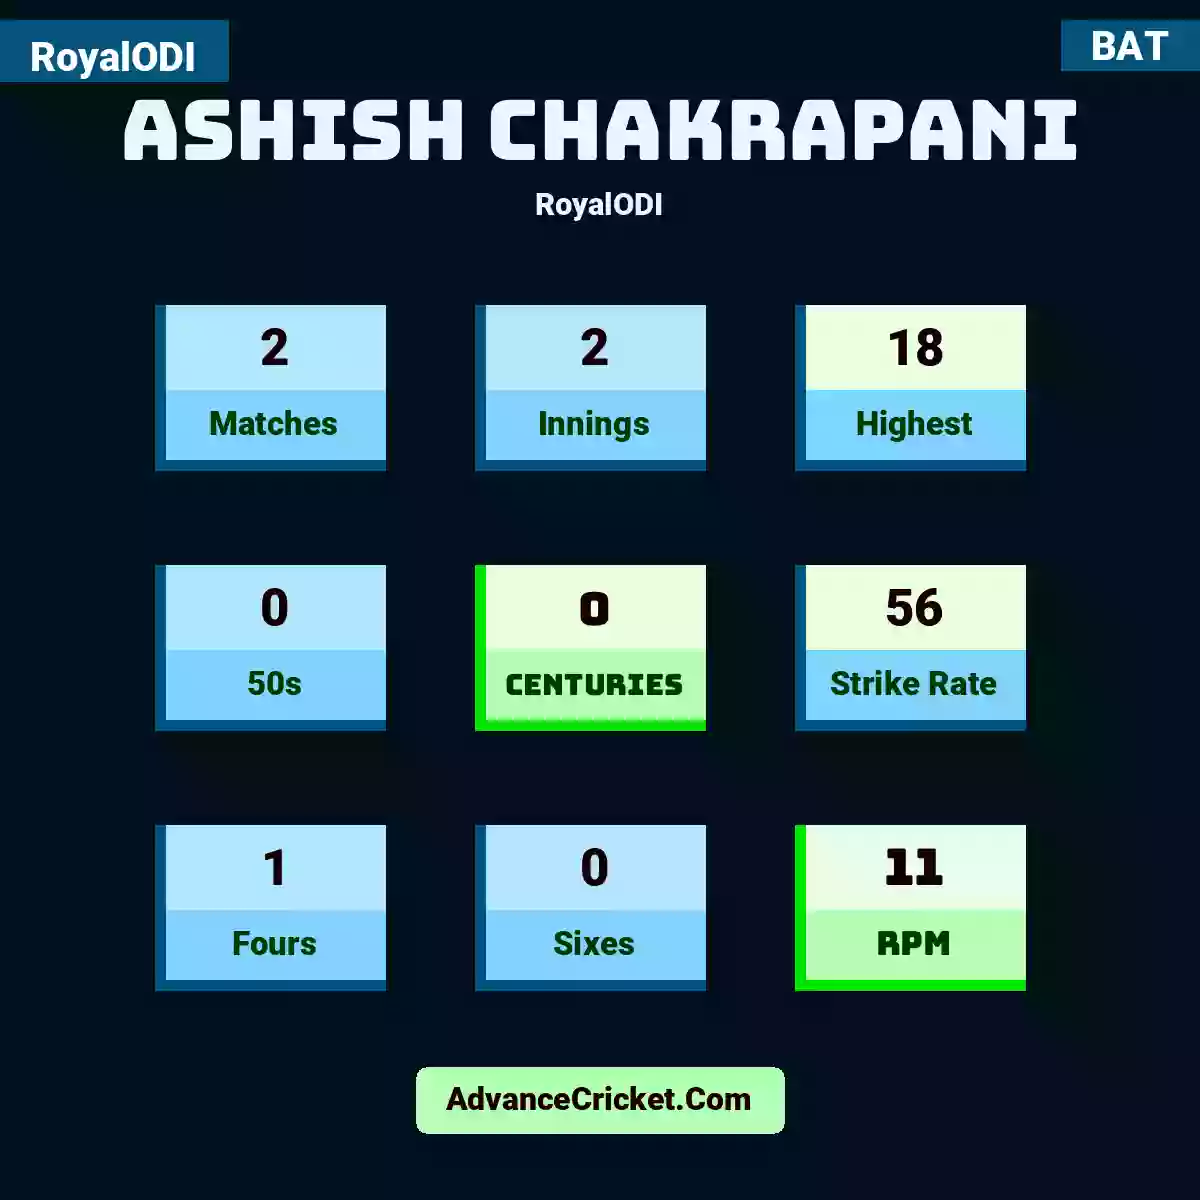 Ashish Chakrapani RoyalODI , Ashish Chakrapani played 2 matches, scored 18 runs as highest, 0 half-centuries, and 0 centuries, with a strike rate of 56. A.Chakrapani hit 1 fours and 0 sixes, with an RPM of 11.